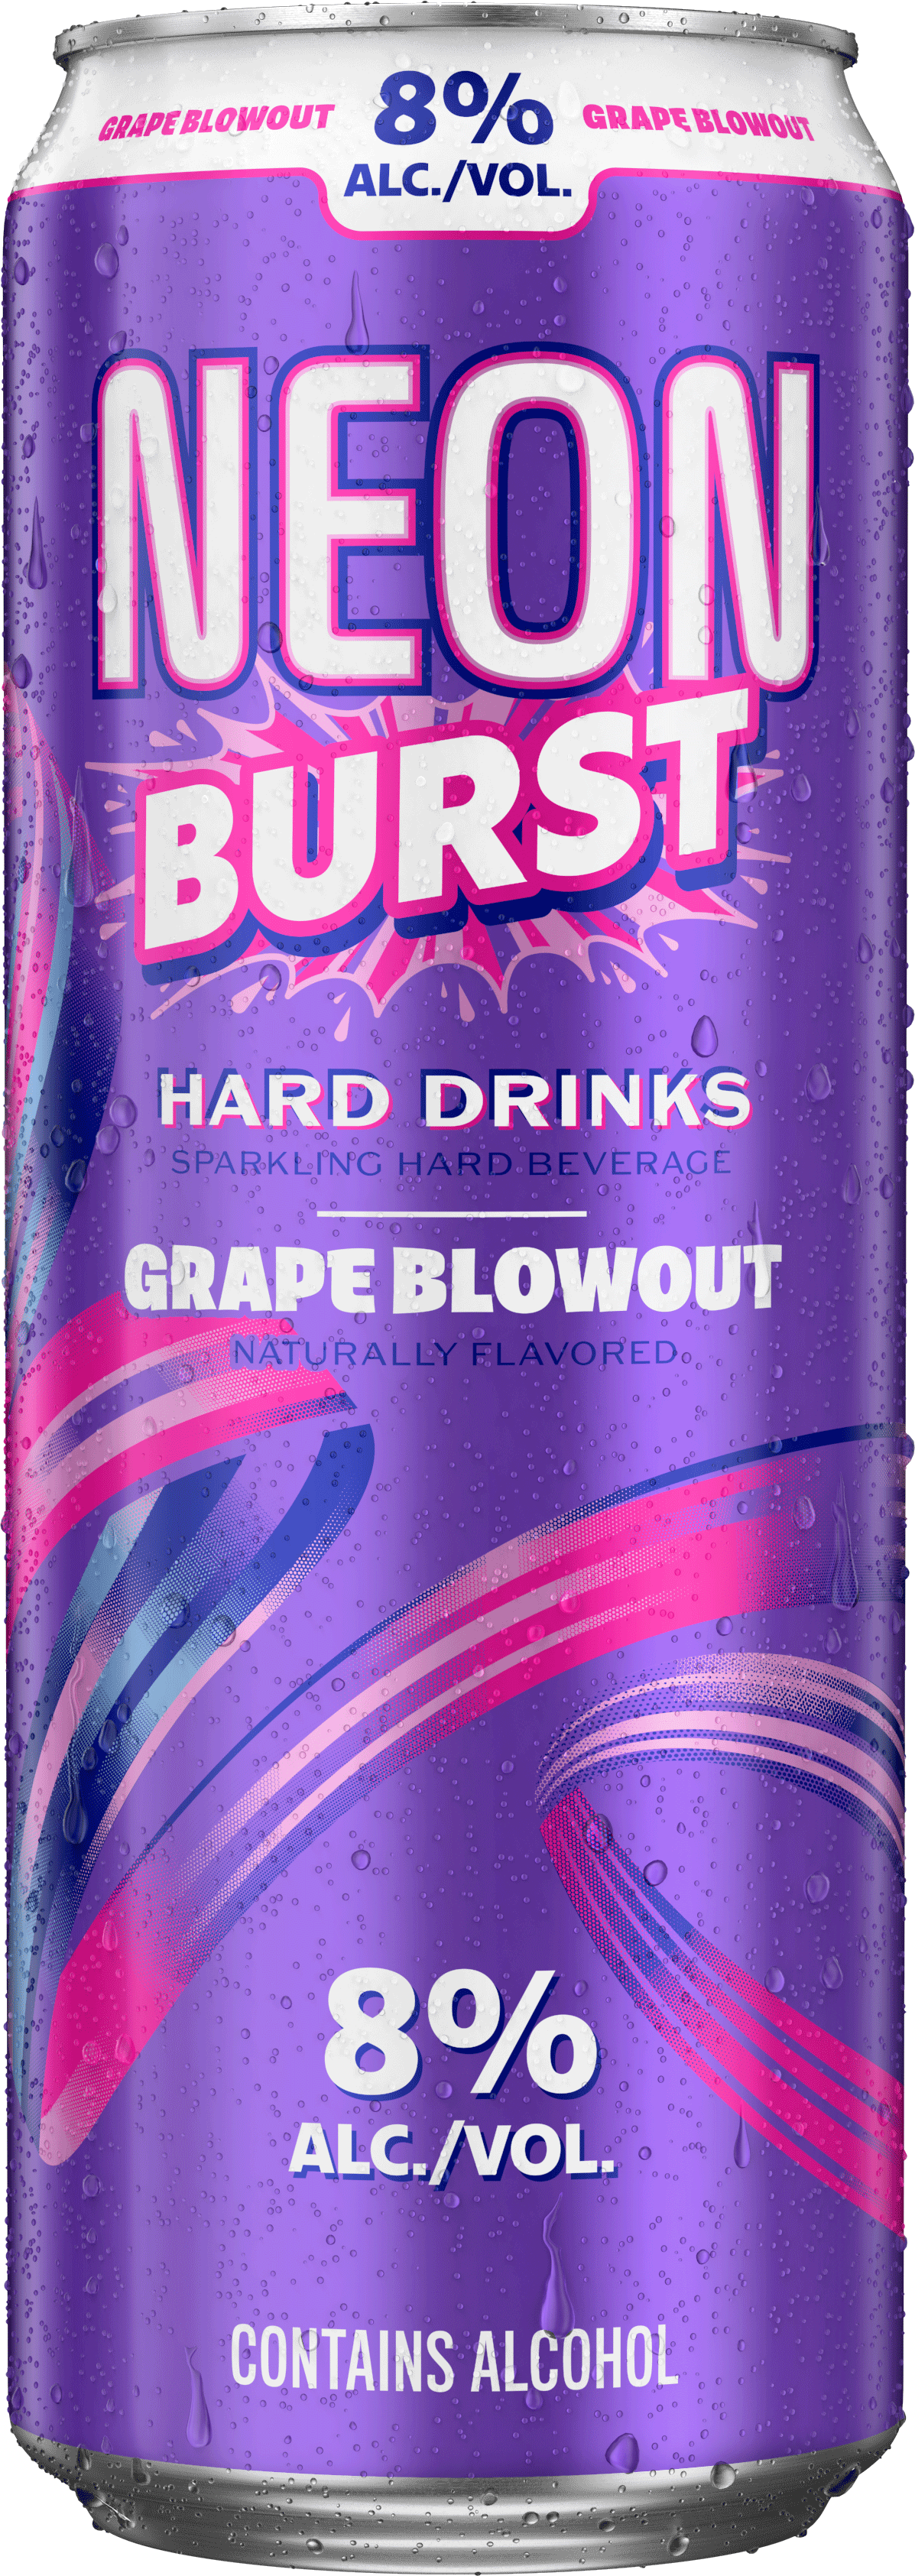 NEON BURST Grape Blowout hard drink flavor. Sparkling hard beverage.